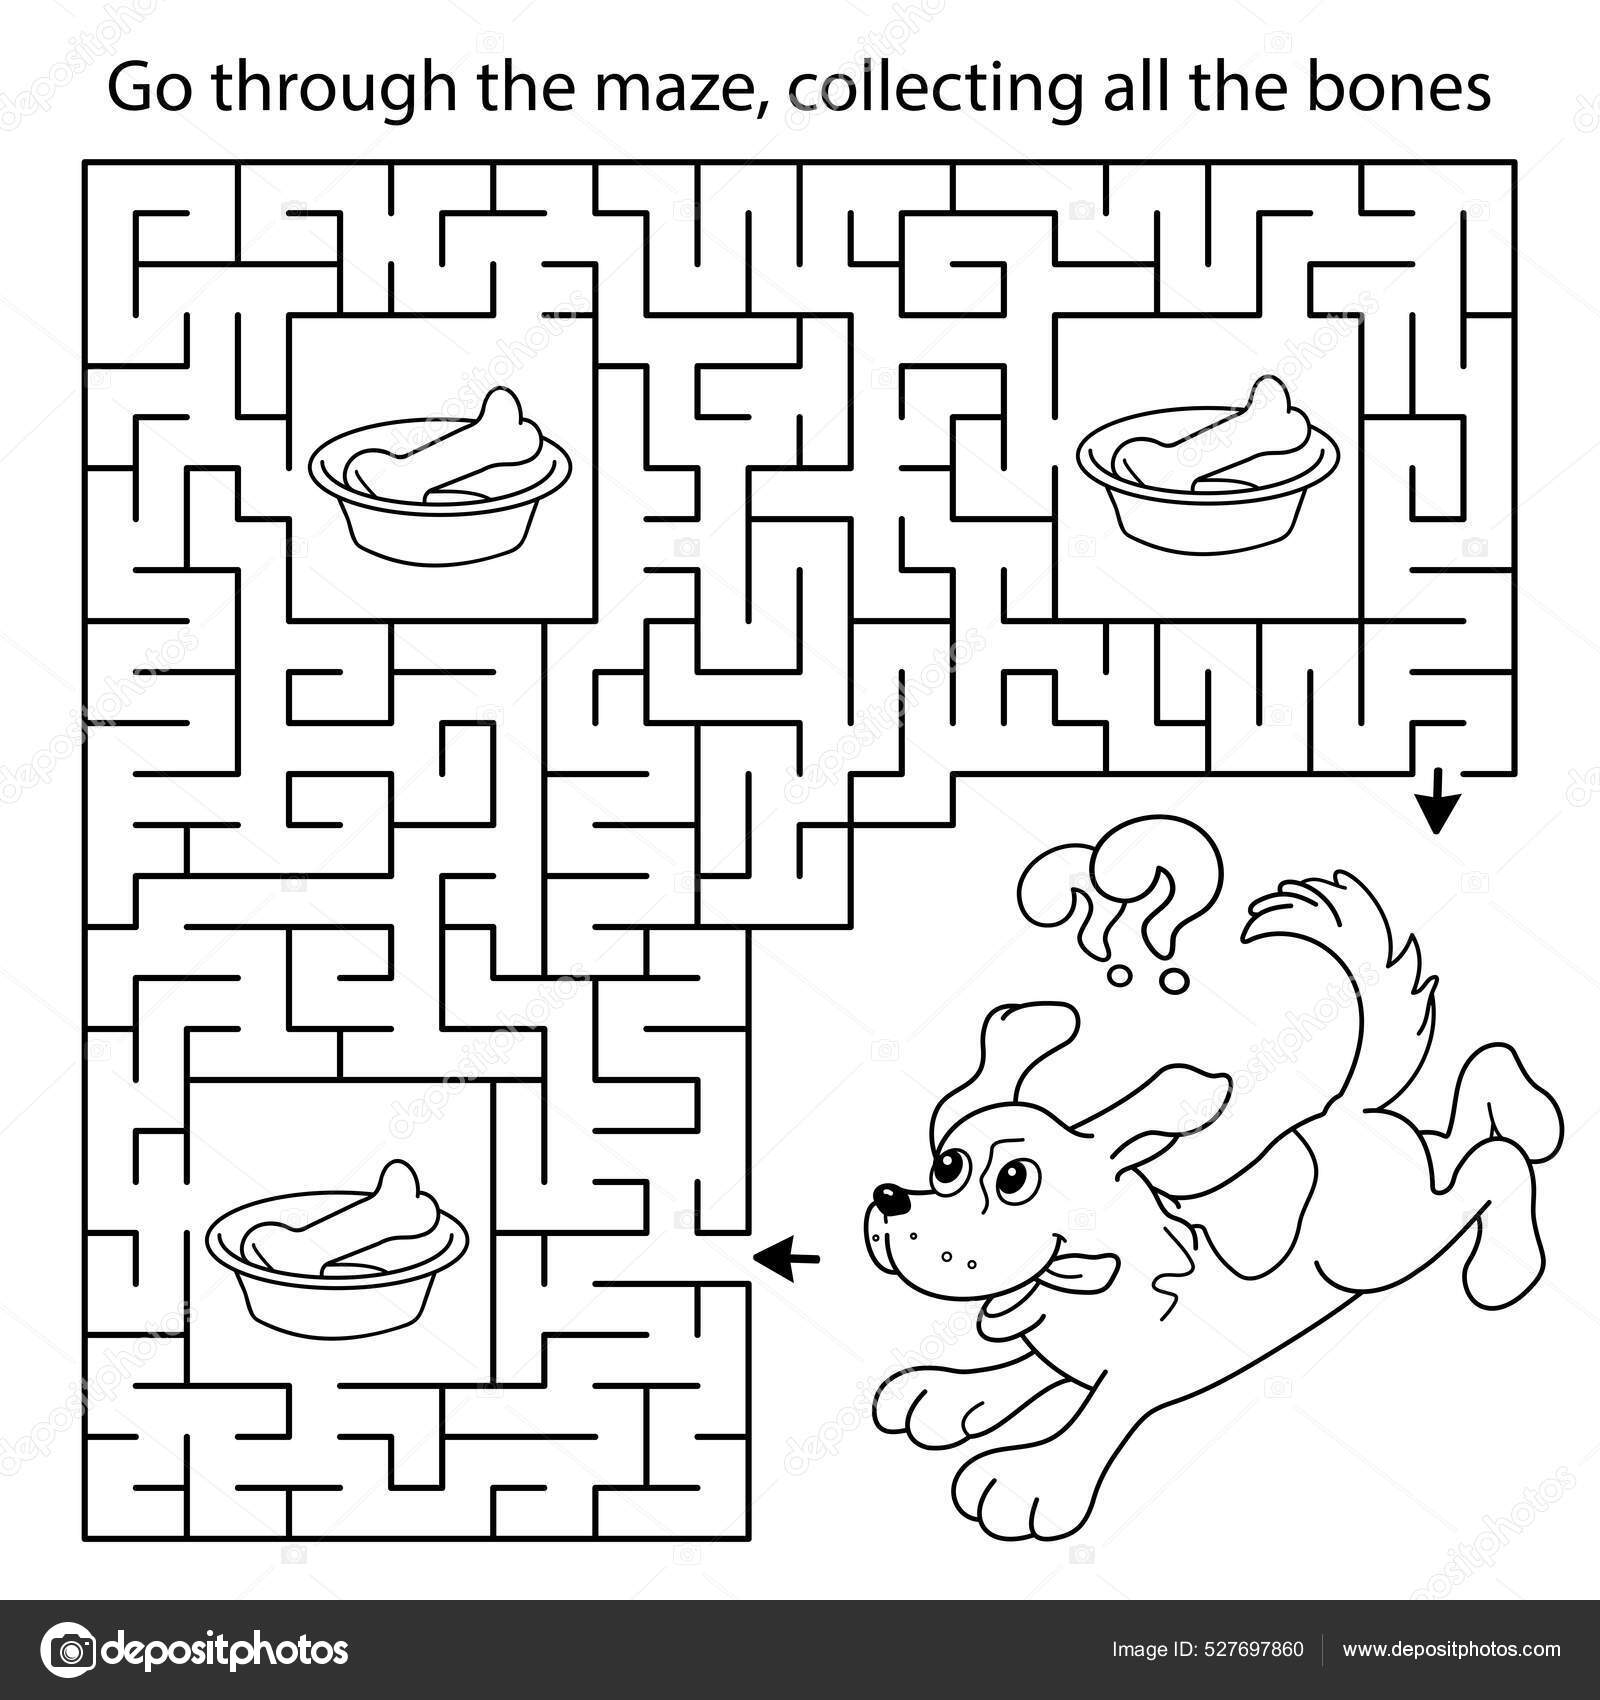 https://st.depositphotos.com/5722118/52769/v/1600/depositphotos_527697860-stock-illustration-maze-labyrinth-game-puzzle-coloring.jpg